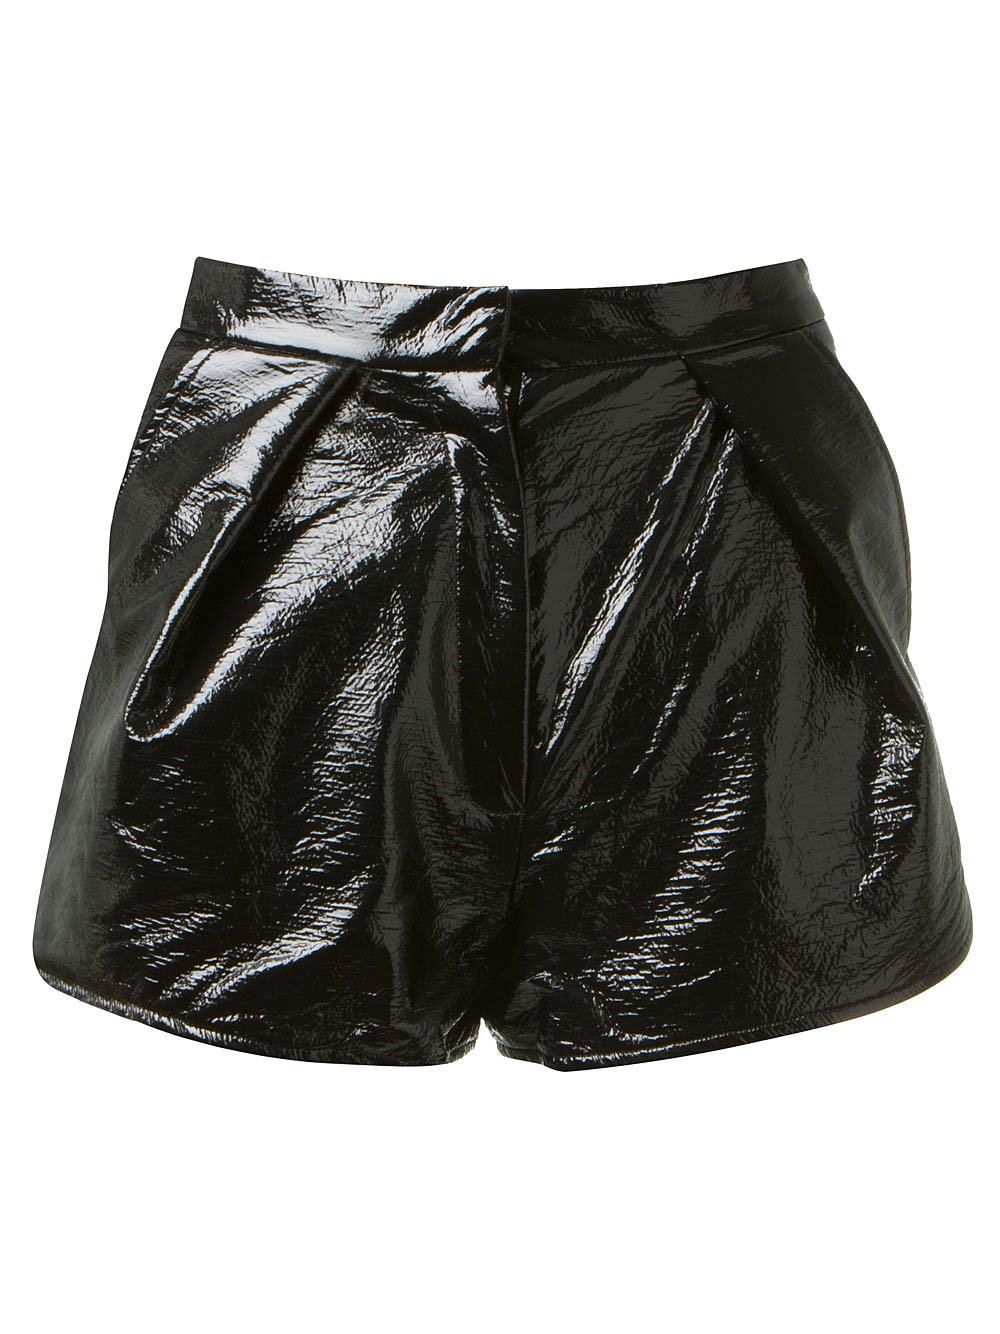 Wanda Nylon Shiny Shorts In Black Lyst 